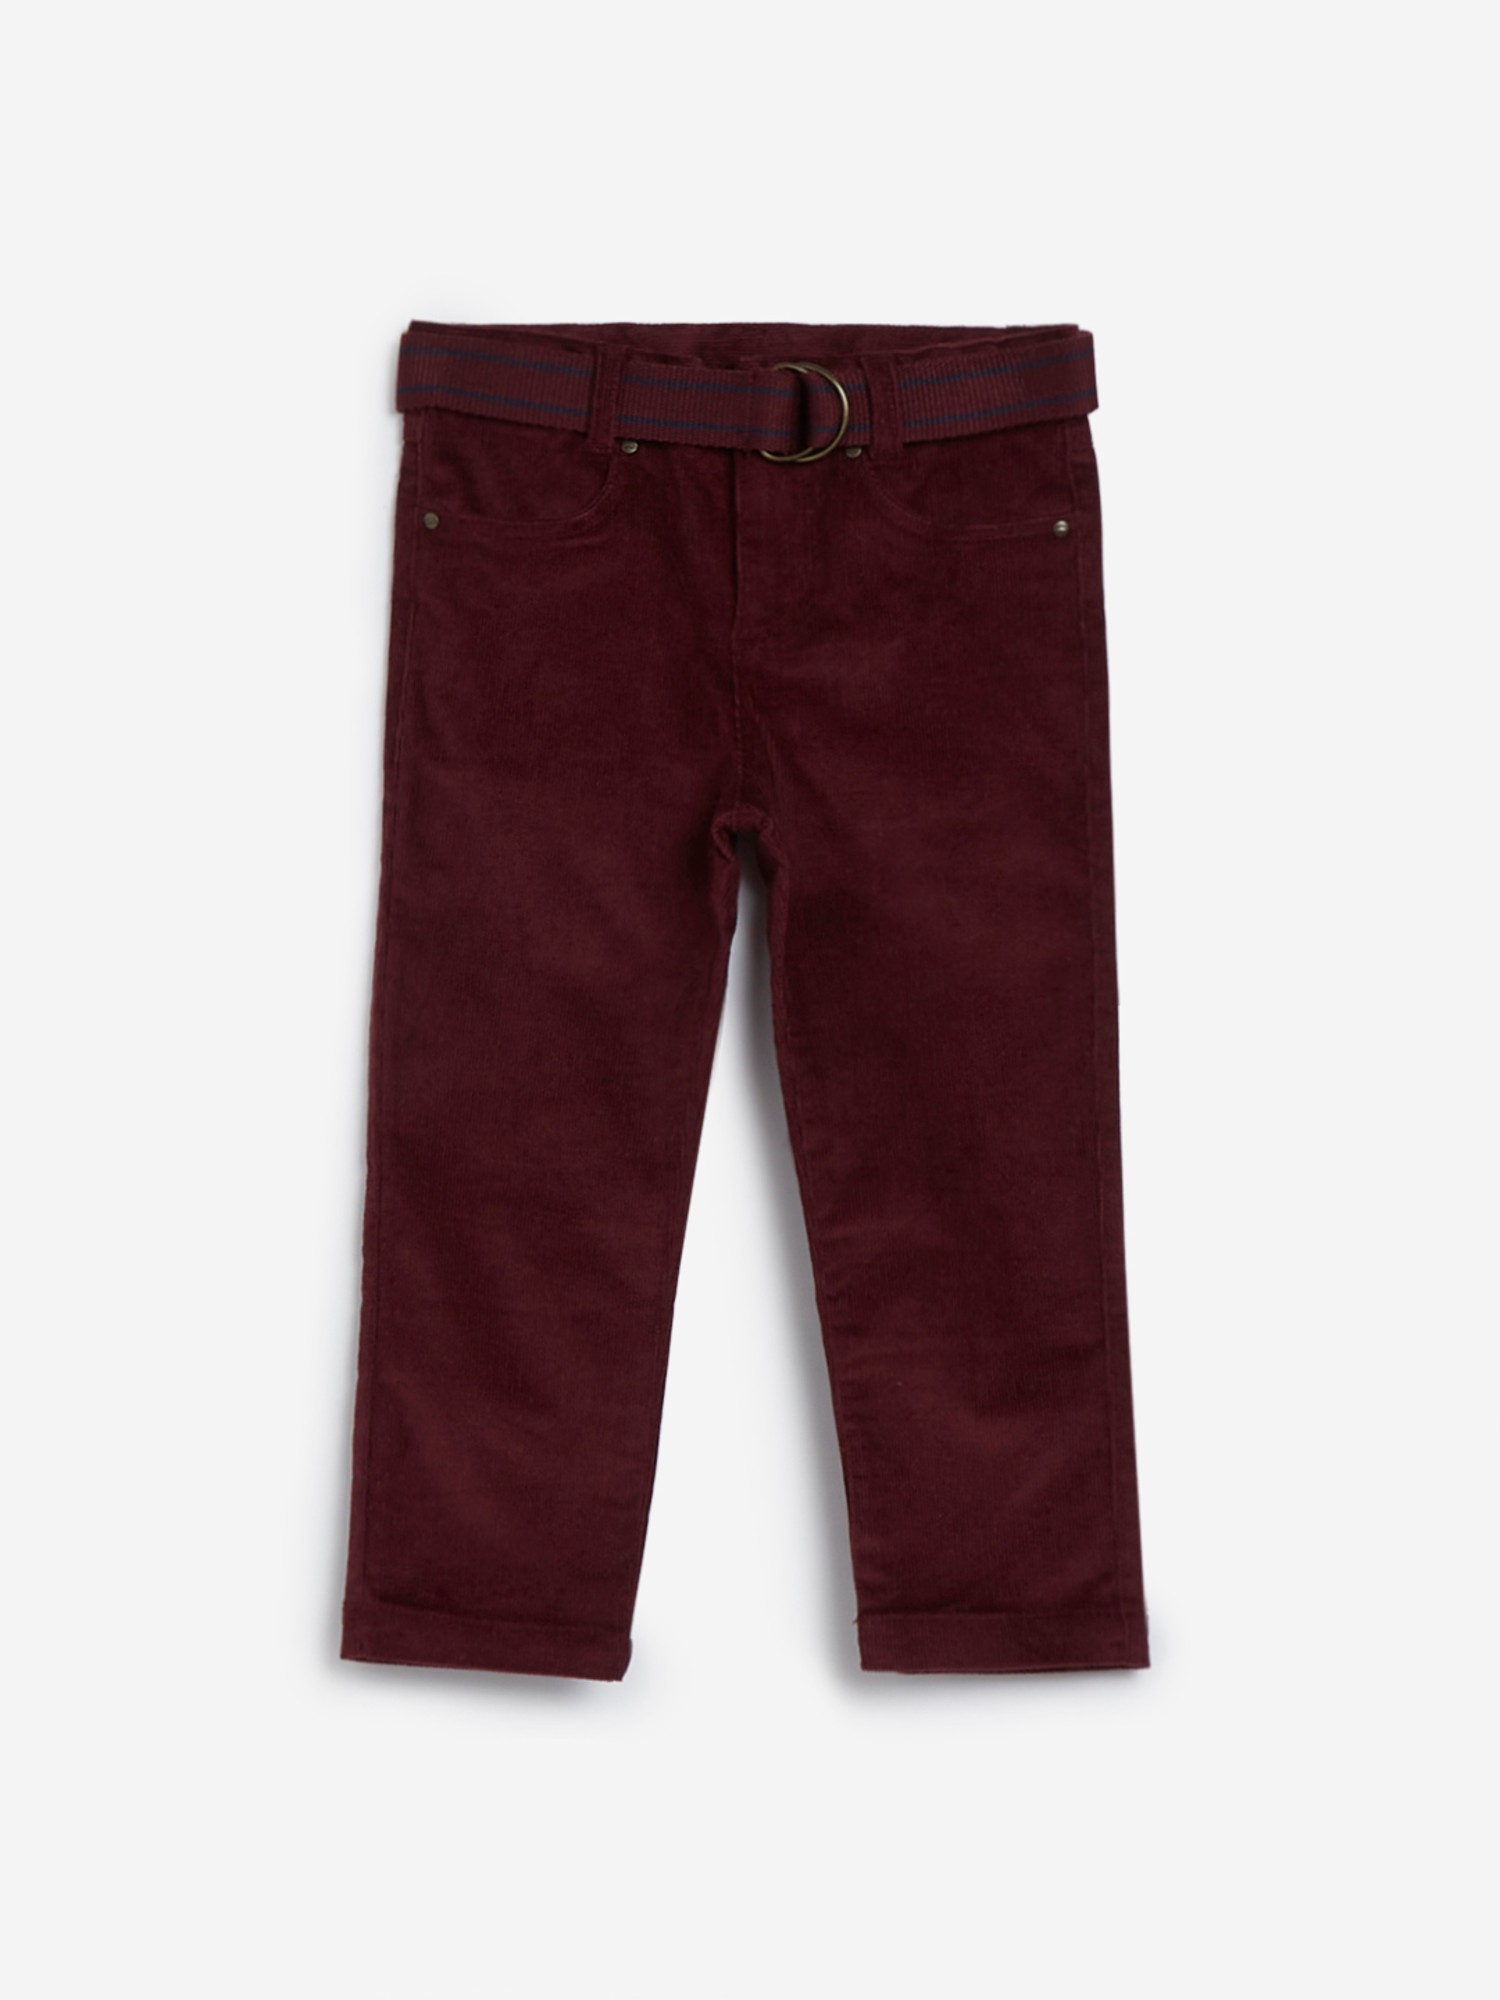 Buy Burgundy Trousers  Pants for Women by AJIO Online  Ajiocom